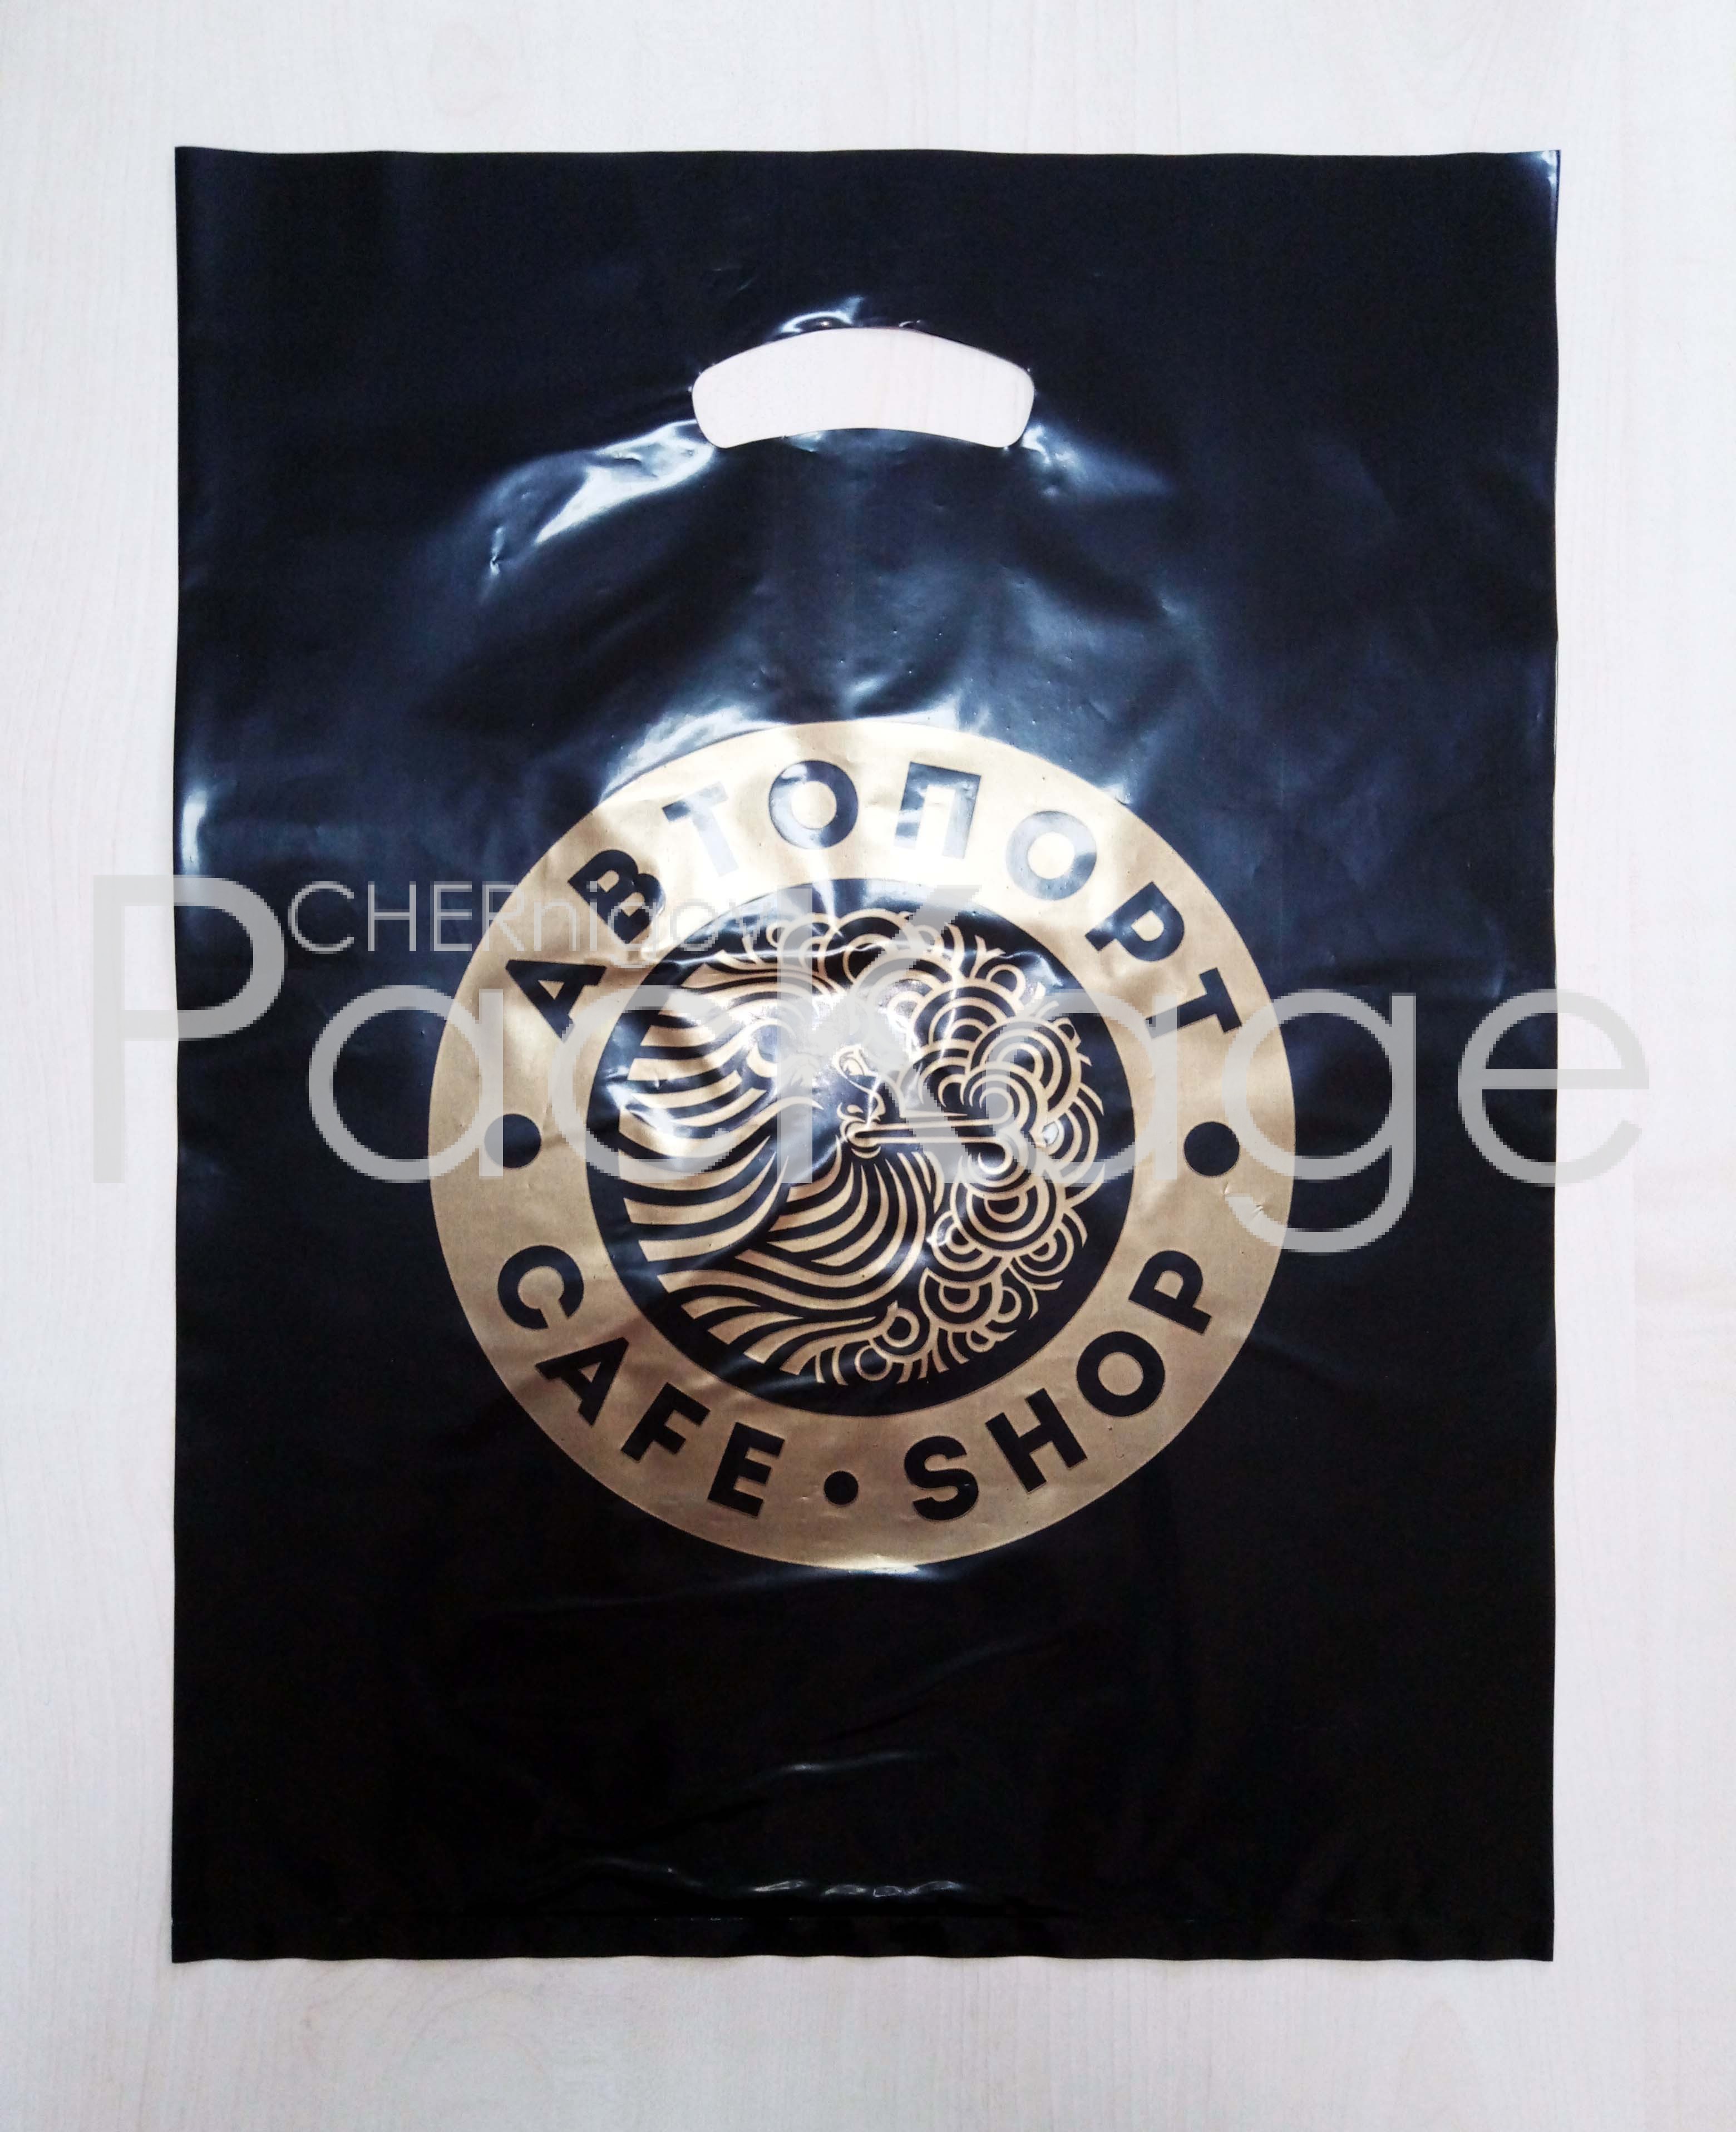 Большие пакеты и мешки Chernigov Package - Photo P70310-104629